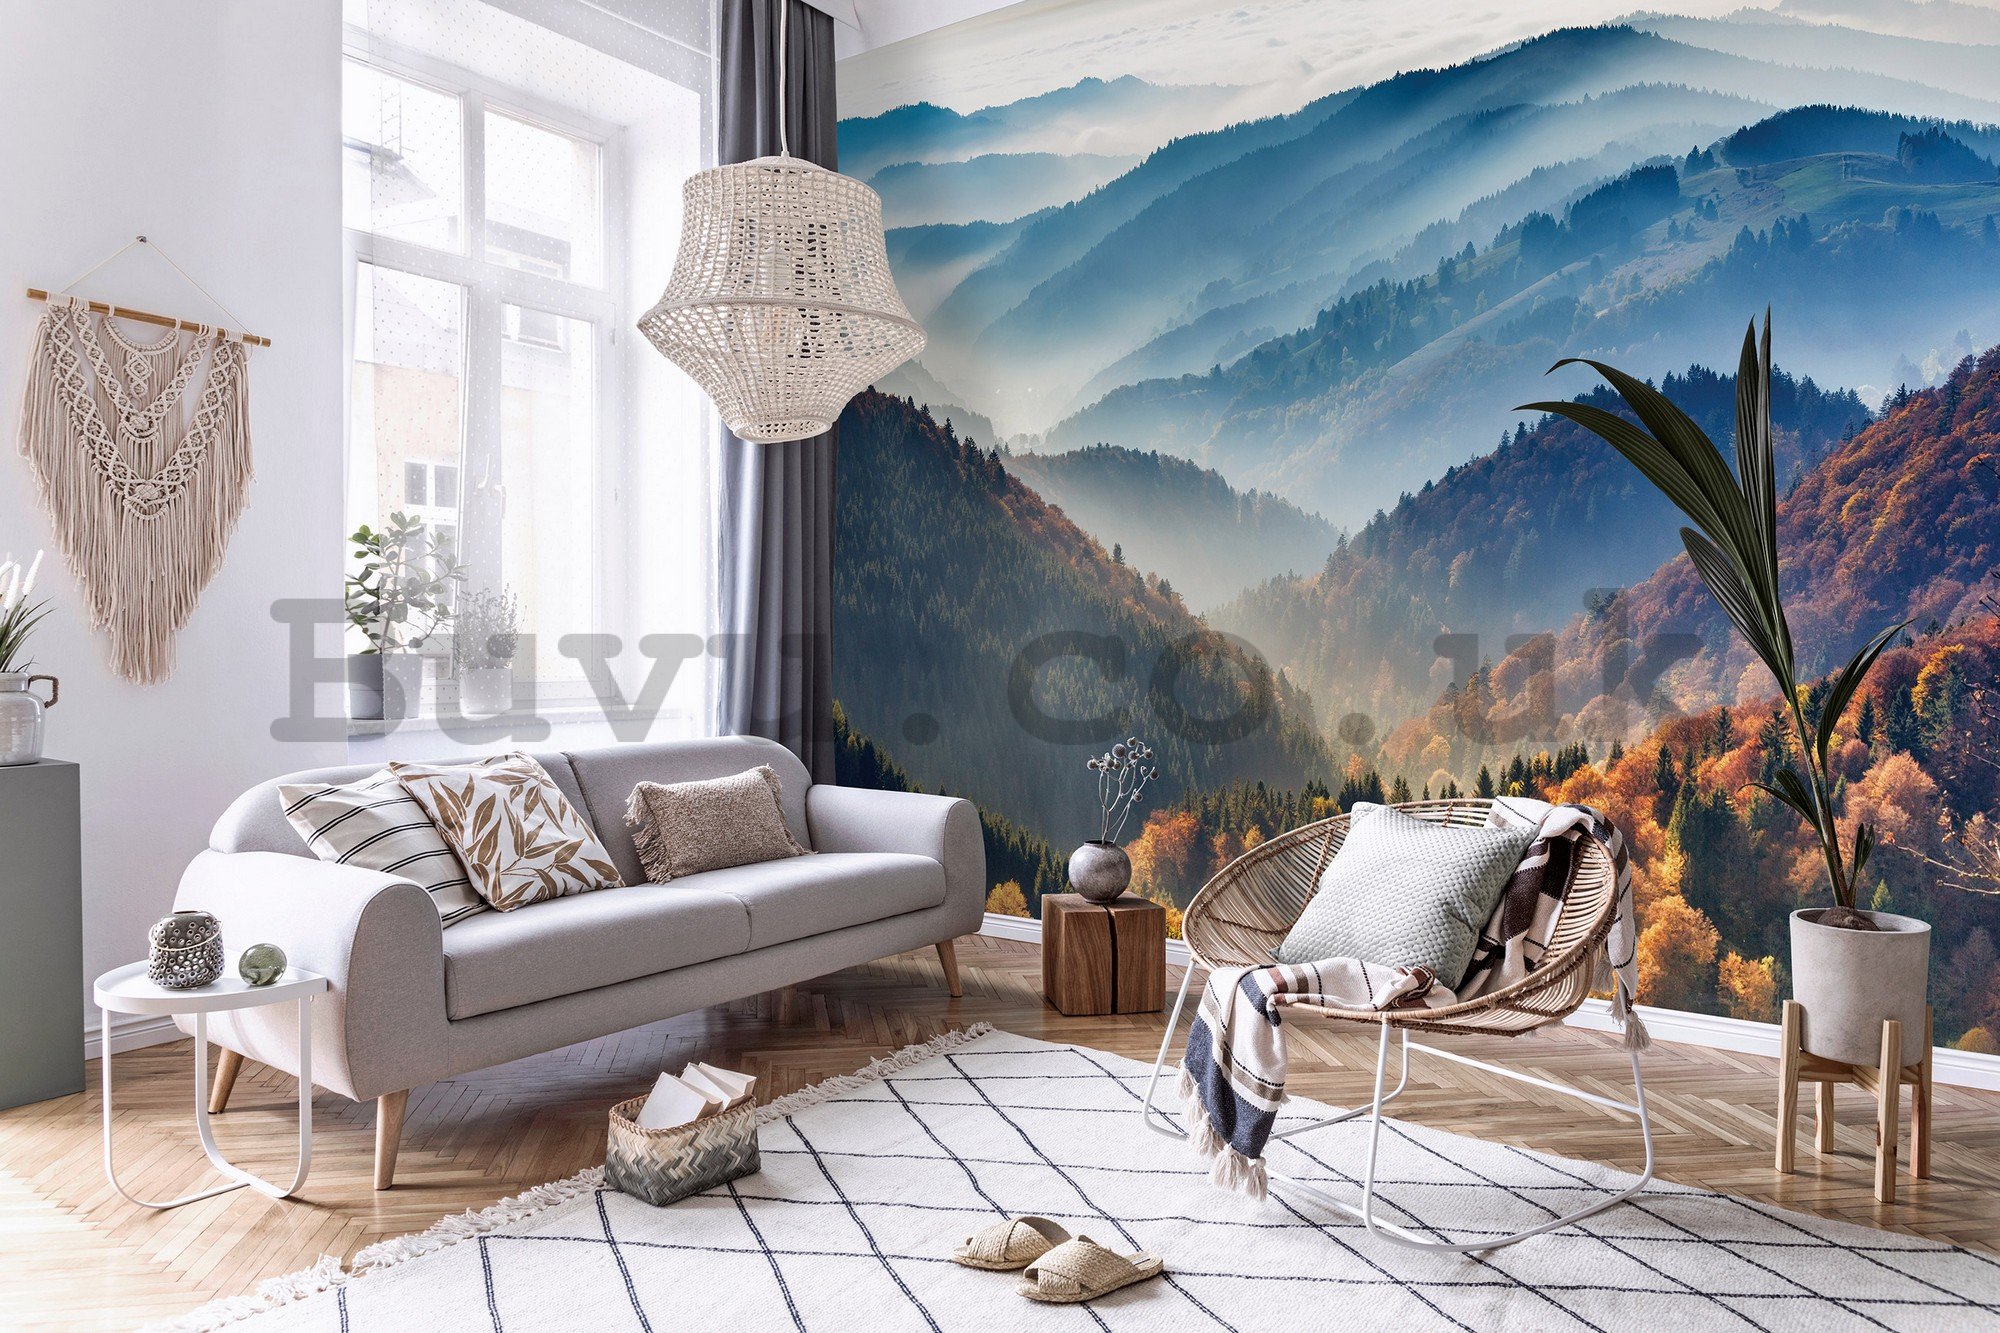 Wall mural vlies: Mountain landscape - 254x184 cm